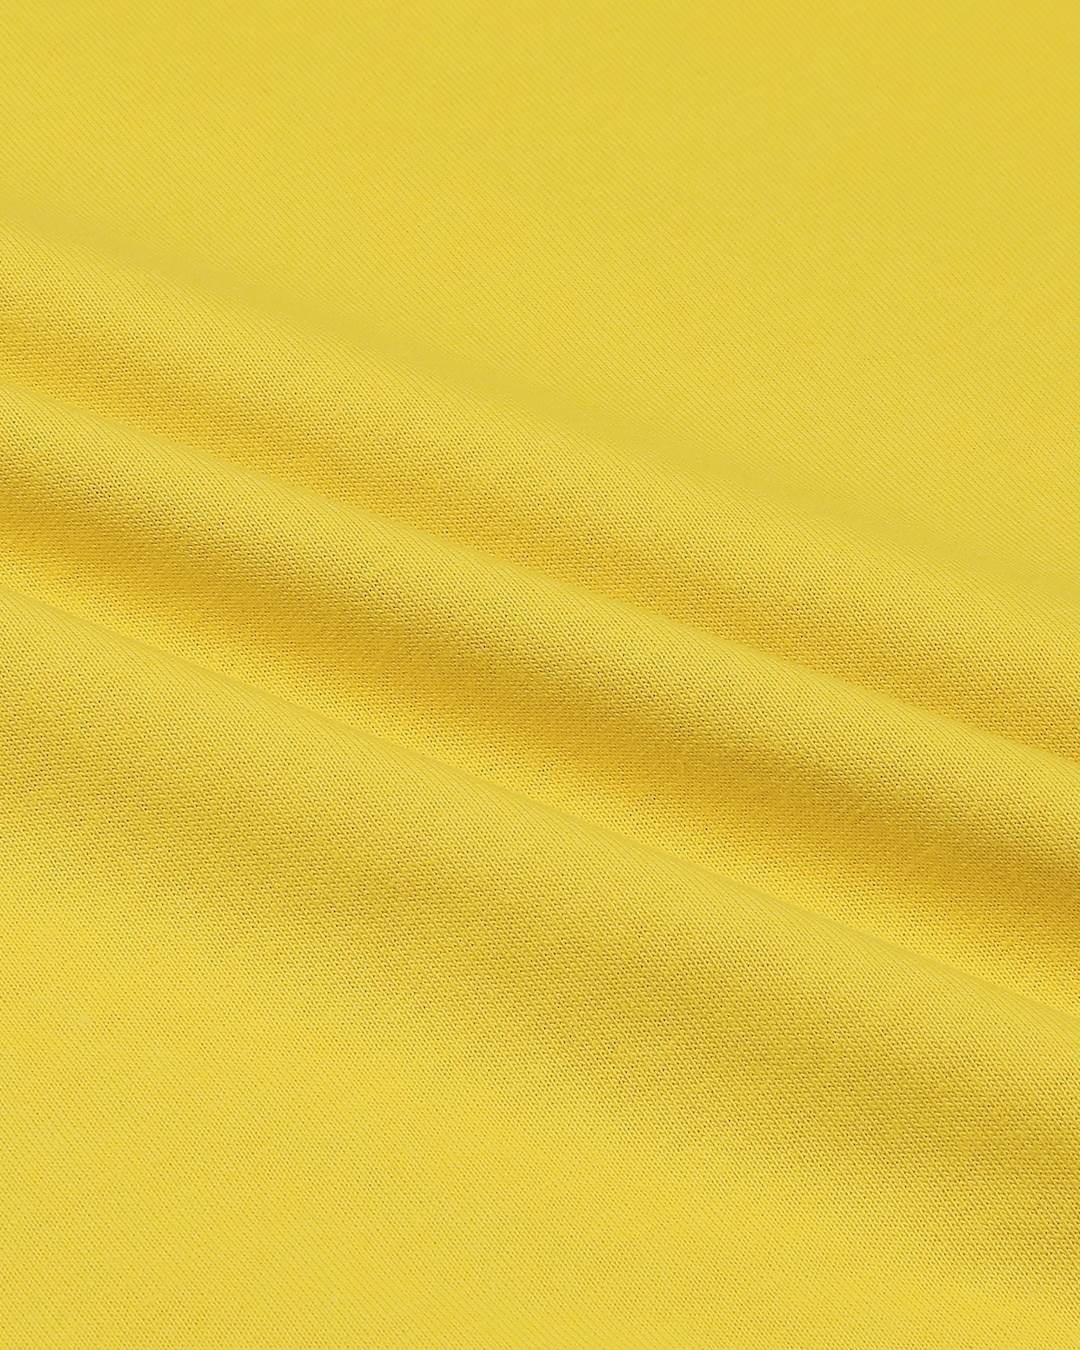 Shop Ceylon Yellow Full Sleeve T-Shirt